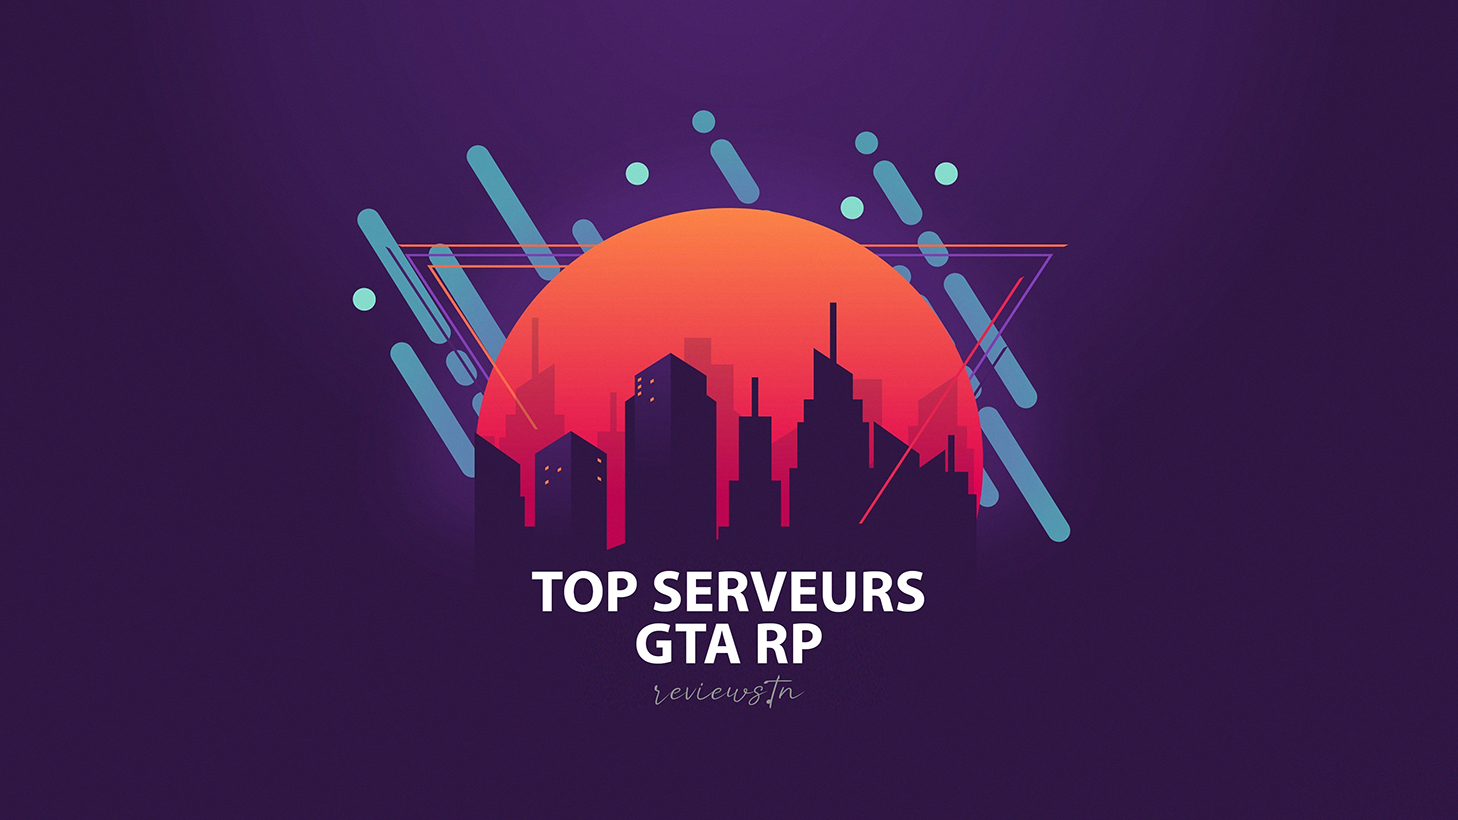 Top optimum GTA RP servers in MMXXII "